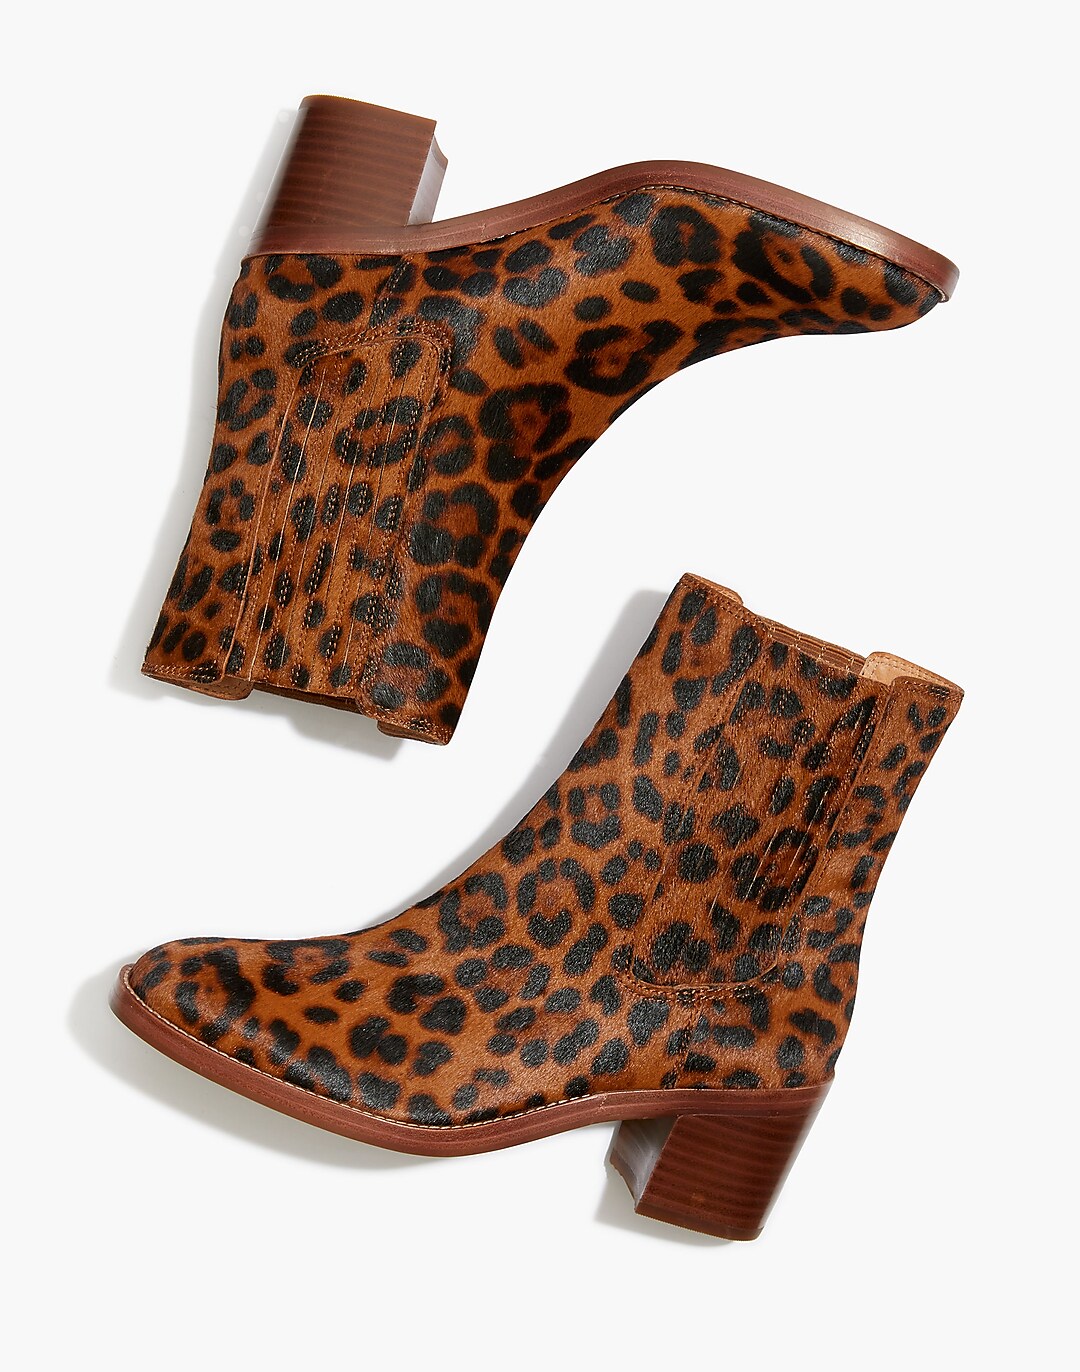 Skrøbelig Predictor Original The Autumn High Chelsea Boot in Leopard Calf Hair